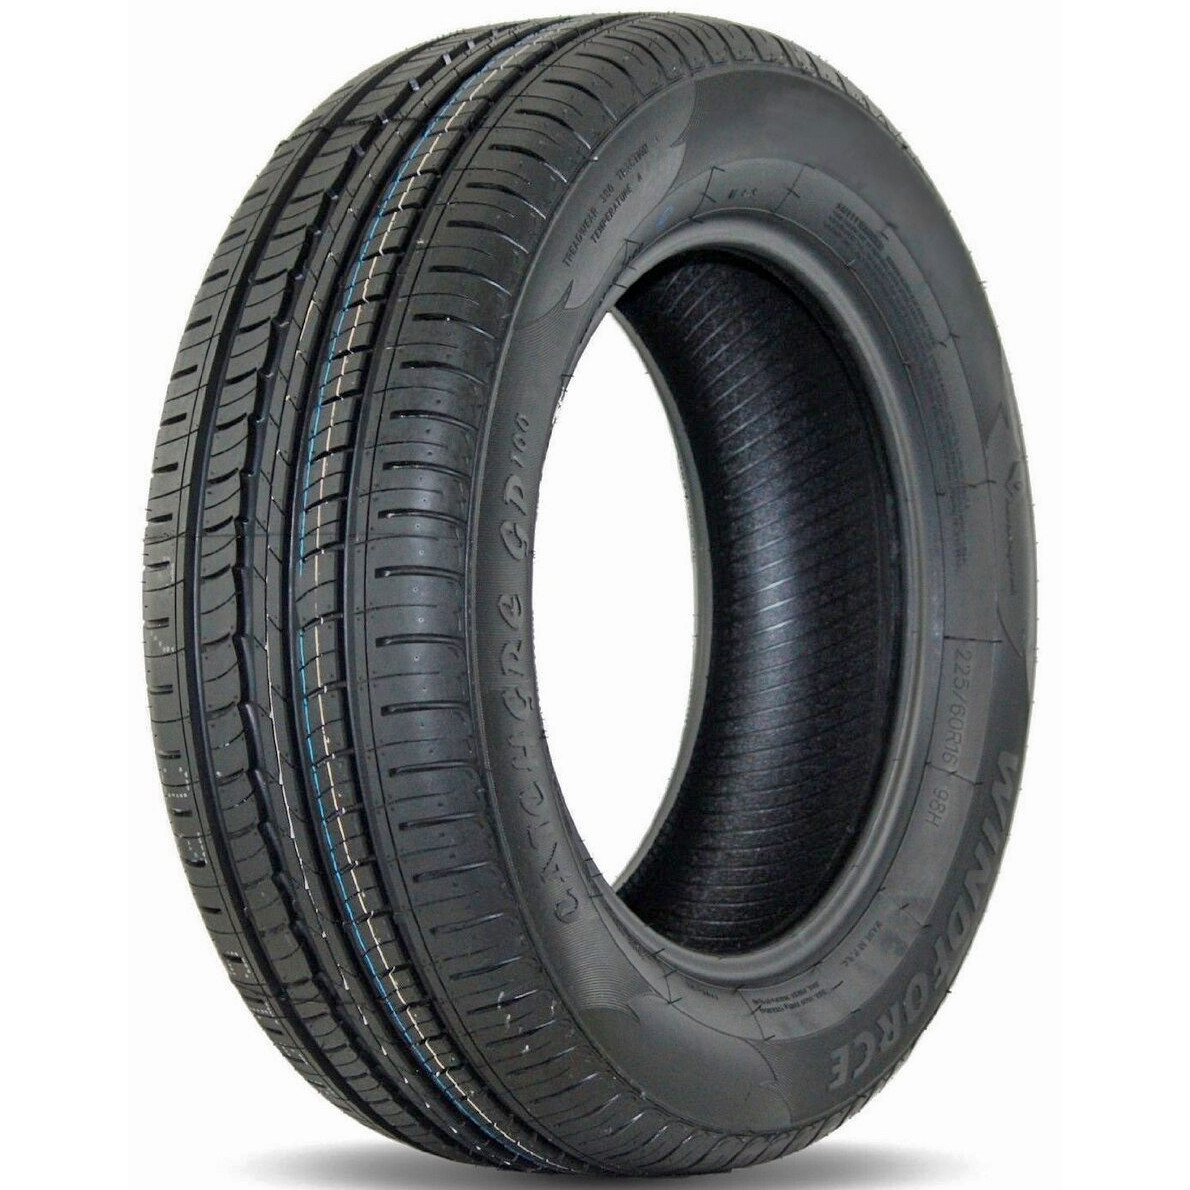 Windforce Tyre Windforce Catchgre GP100 (215/55R16 93H) - зображення 1